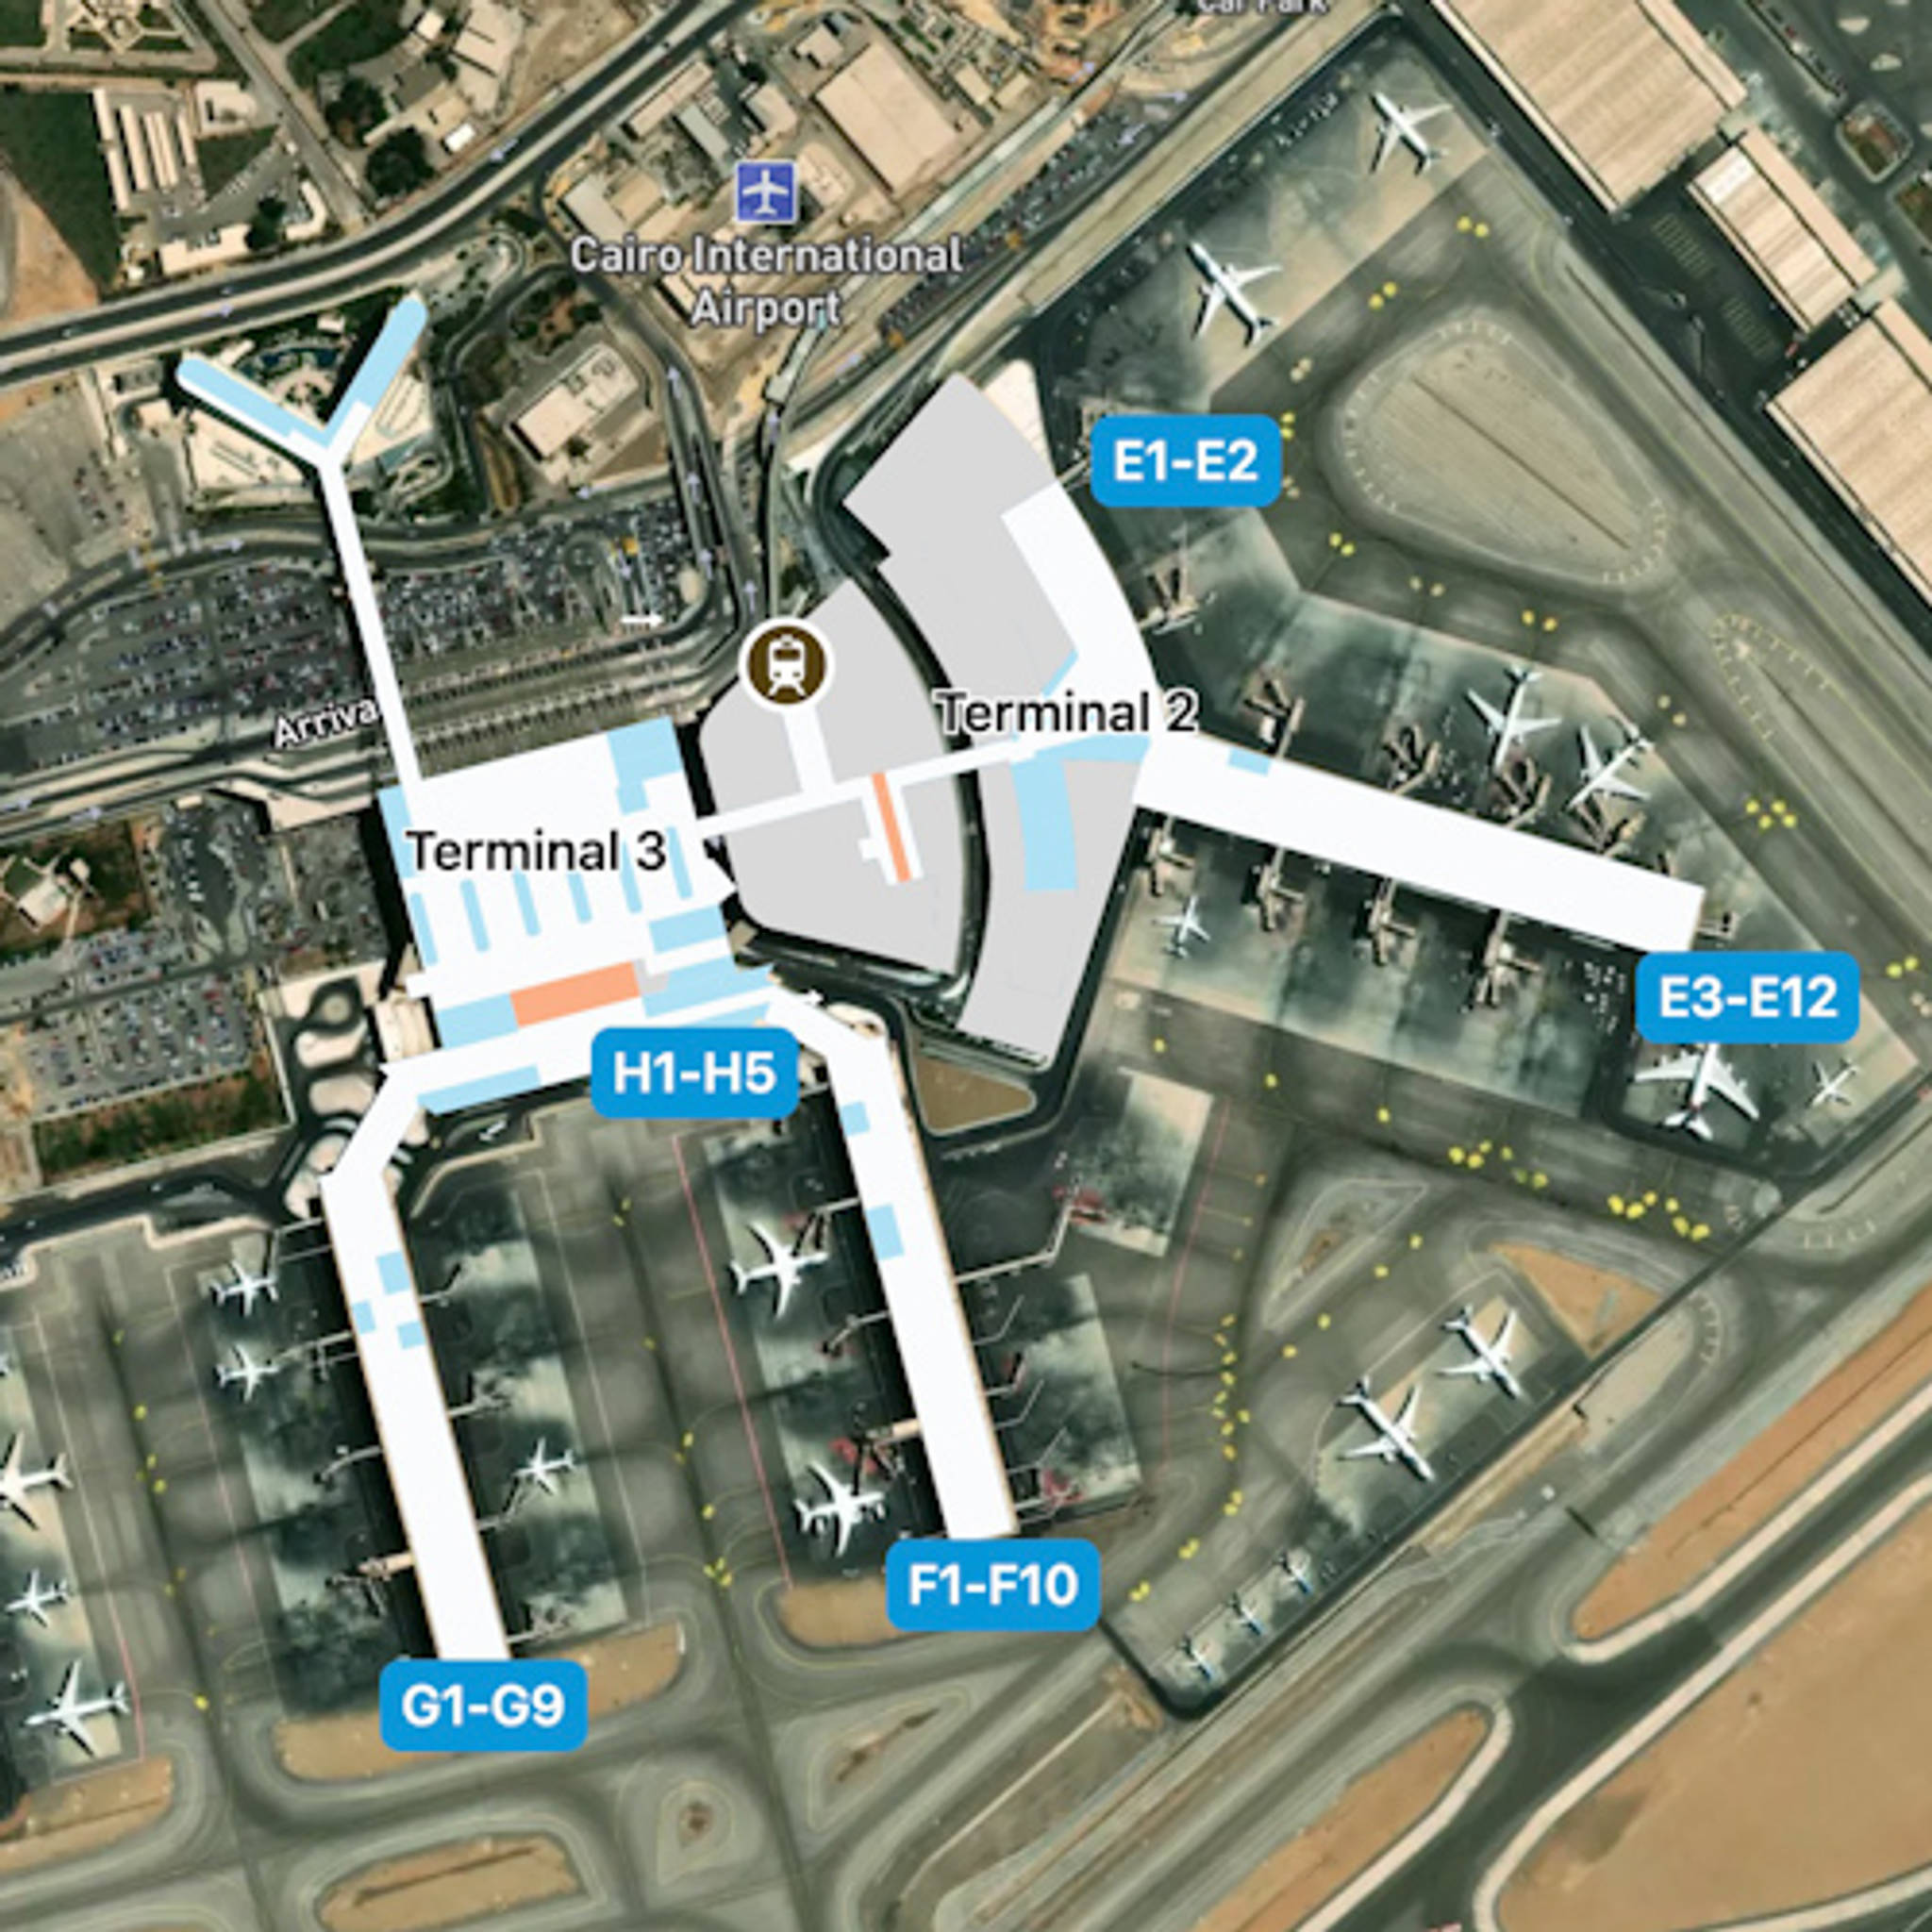 Cairo International Airport CAI Terminal Overview Map